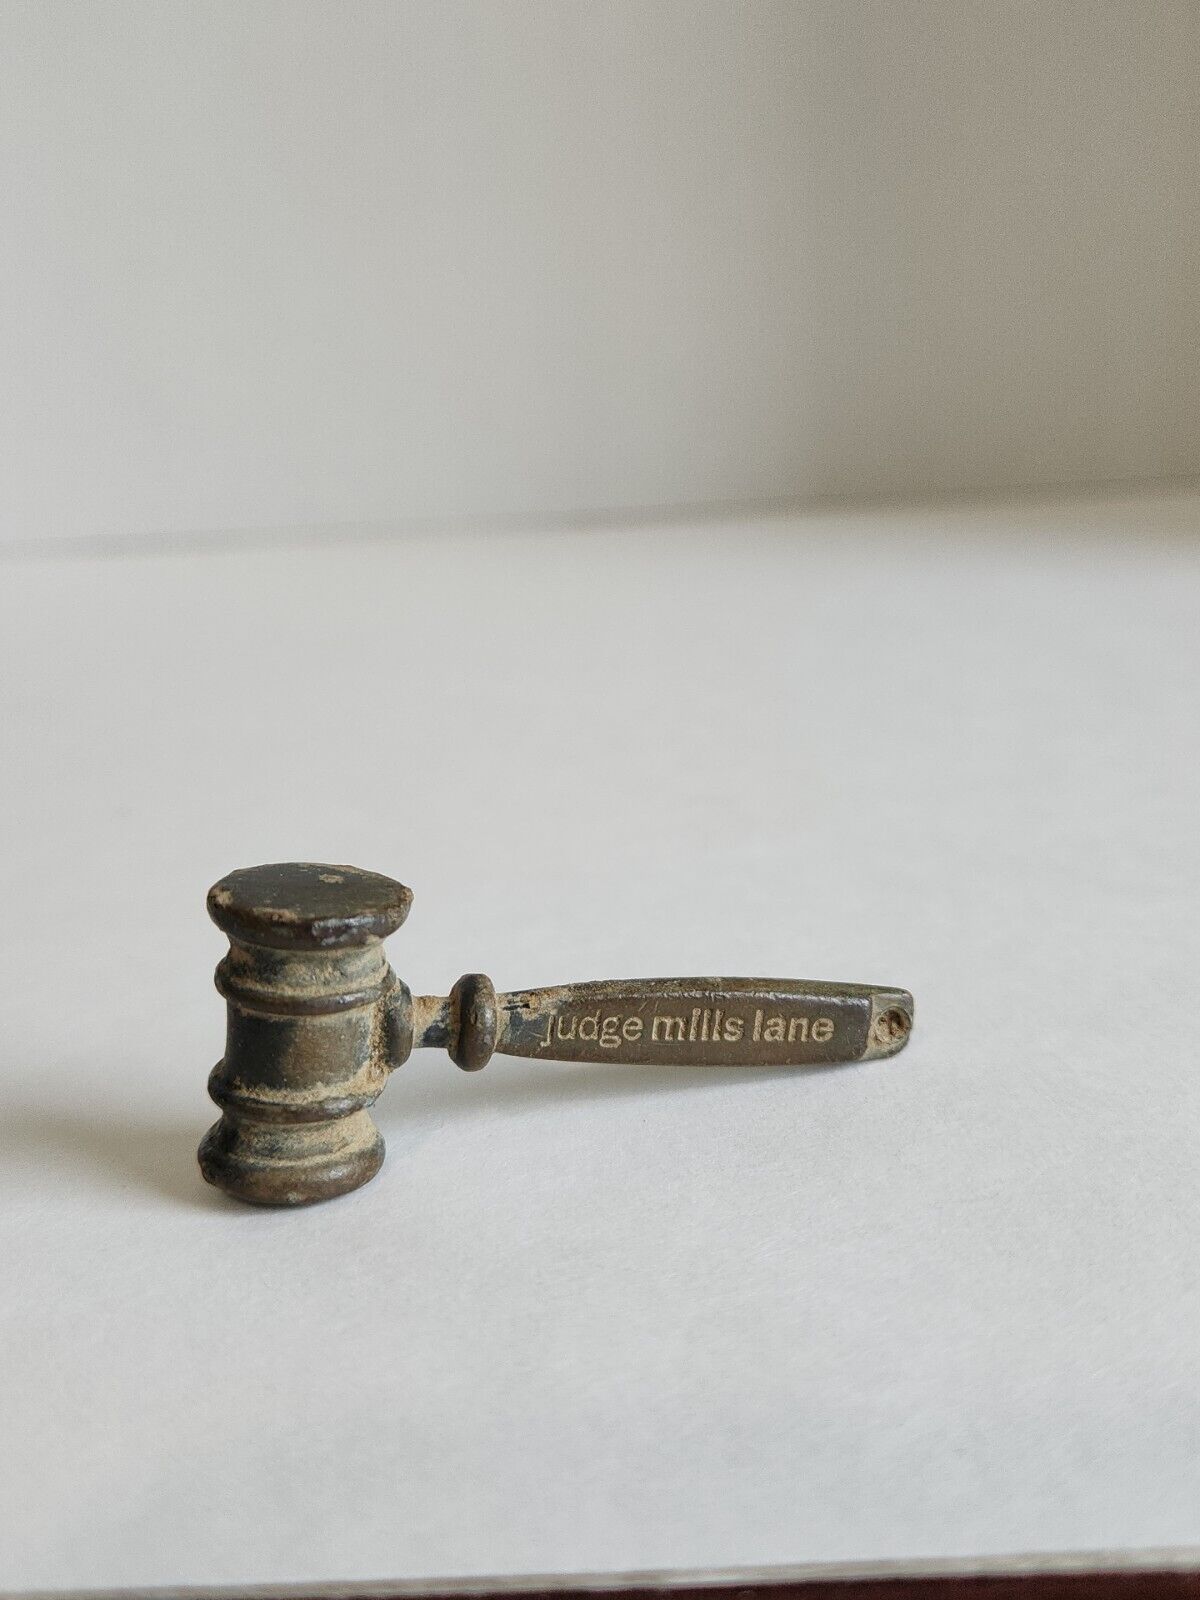 Judge Mills Lane Vintage Metal Gavel Keychain Gift Found Metal Detecting